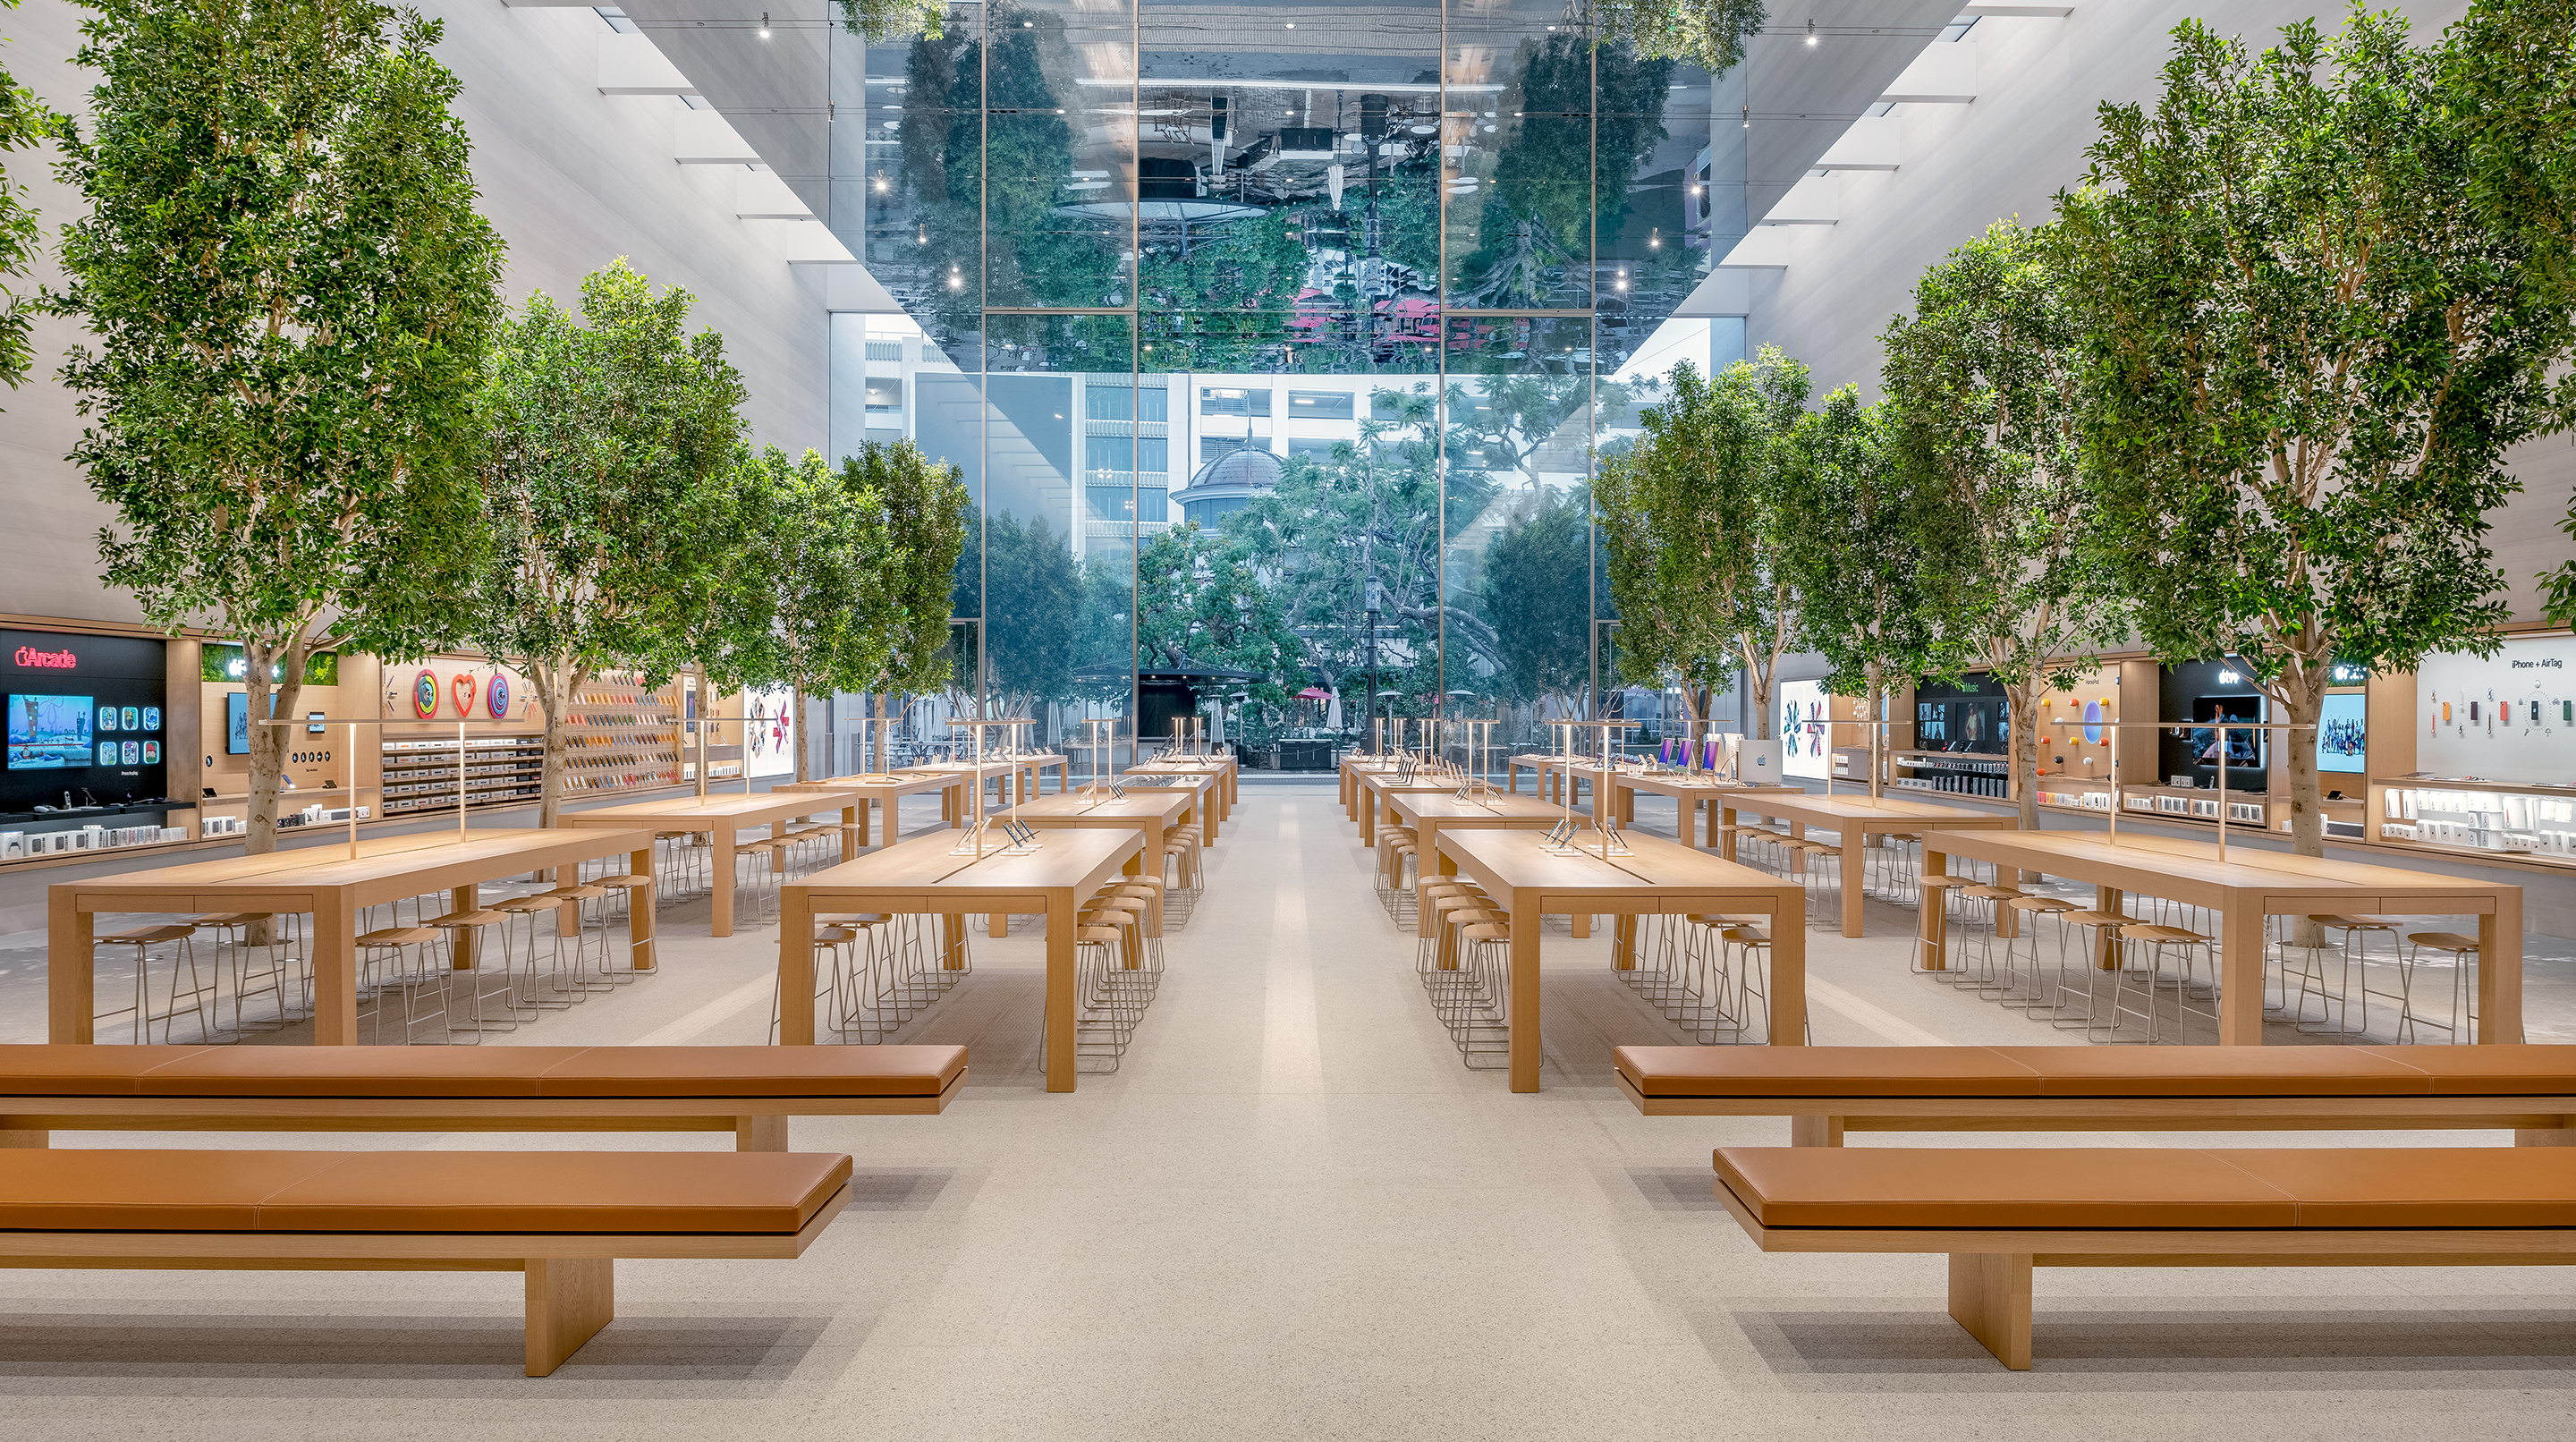 South Coast Plaza - Apple Store - Apple